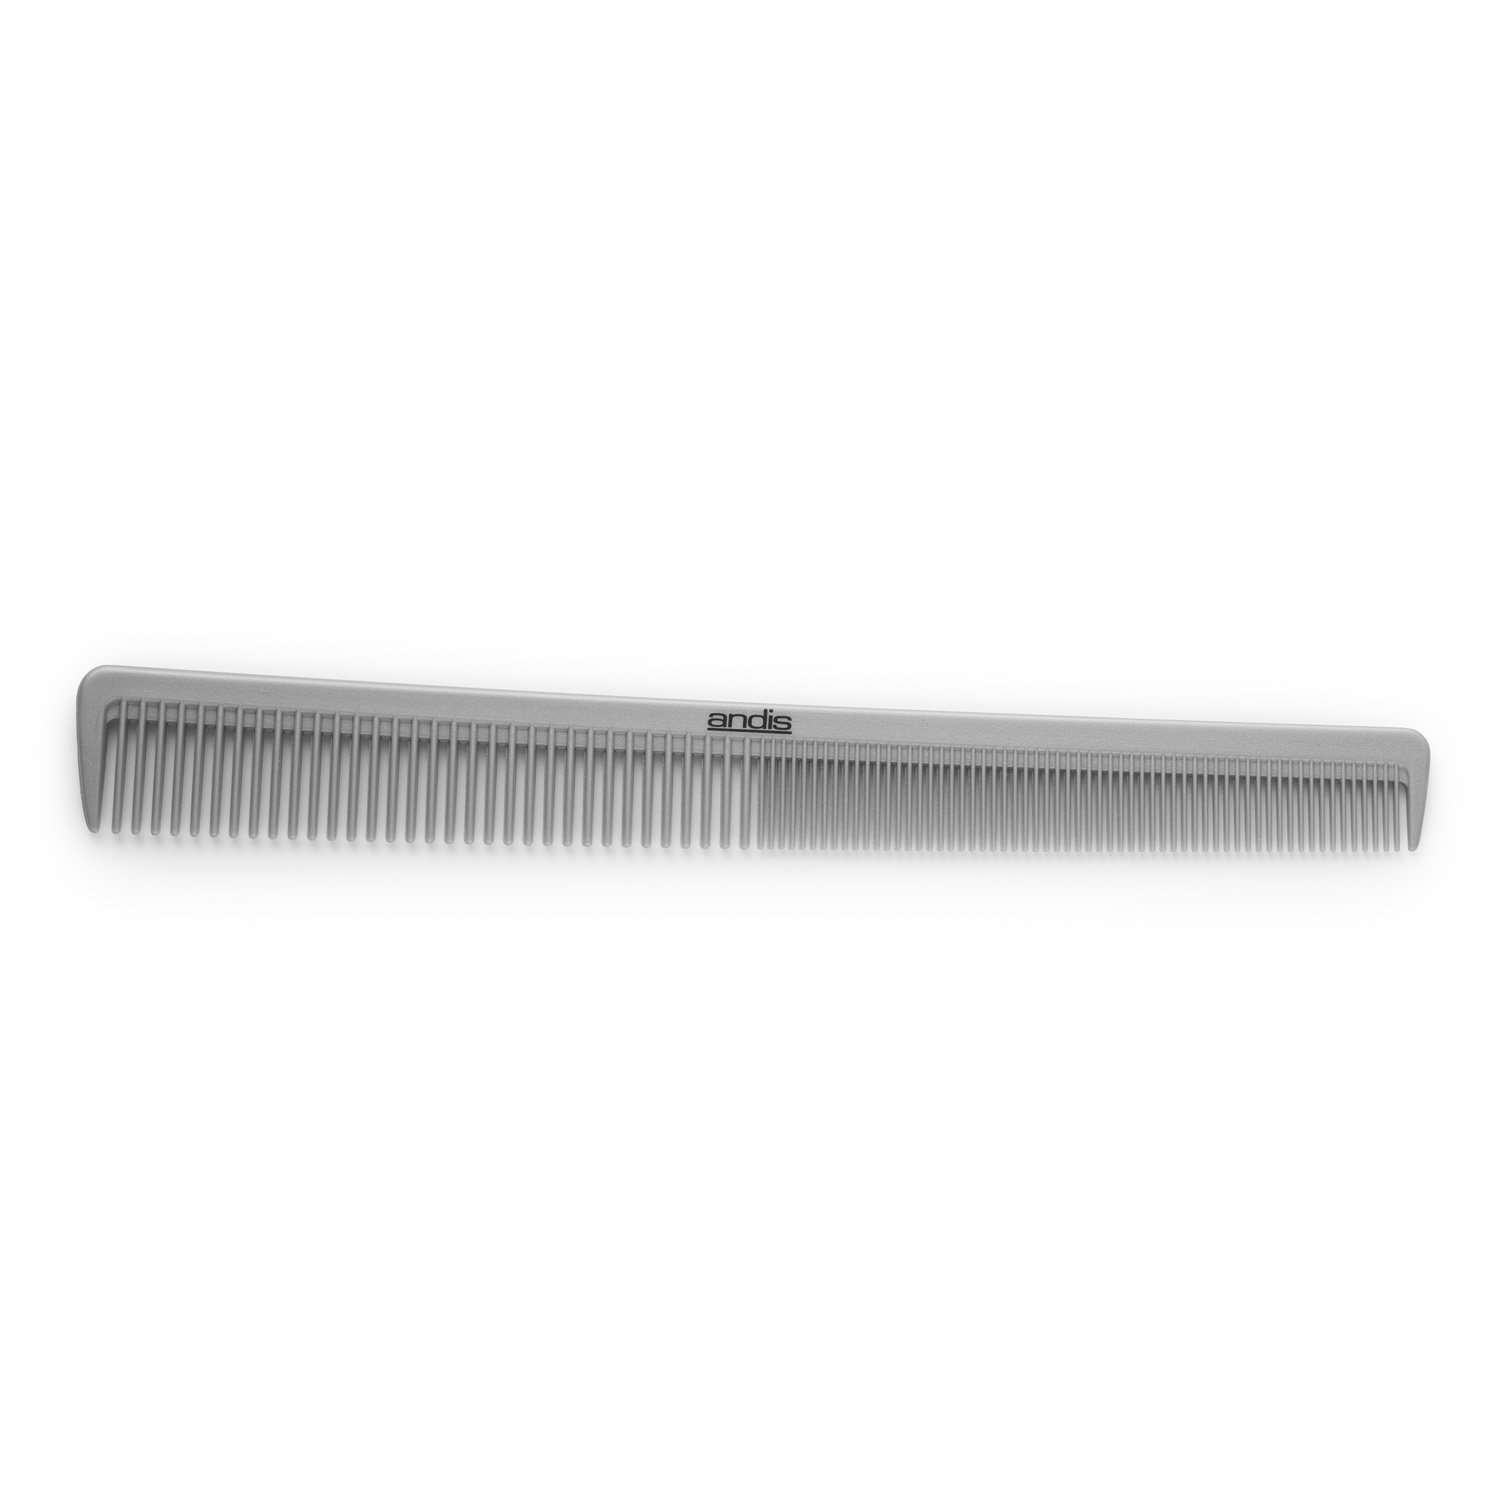 Andis 3932 Barber taperin comb, grey - holičský kombinovaný hrebeň